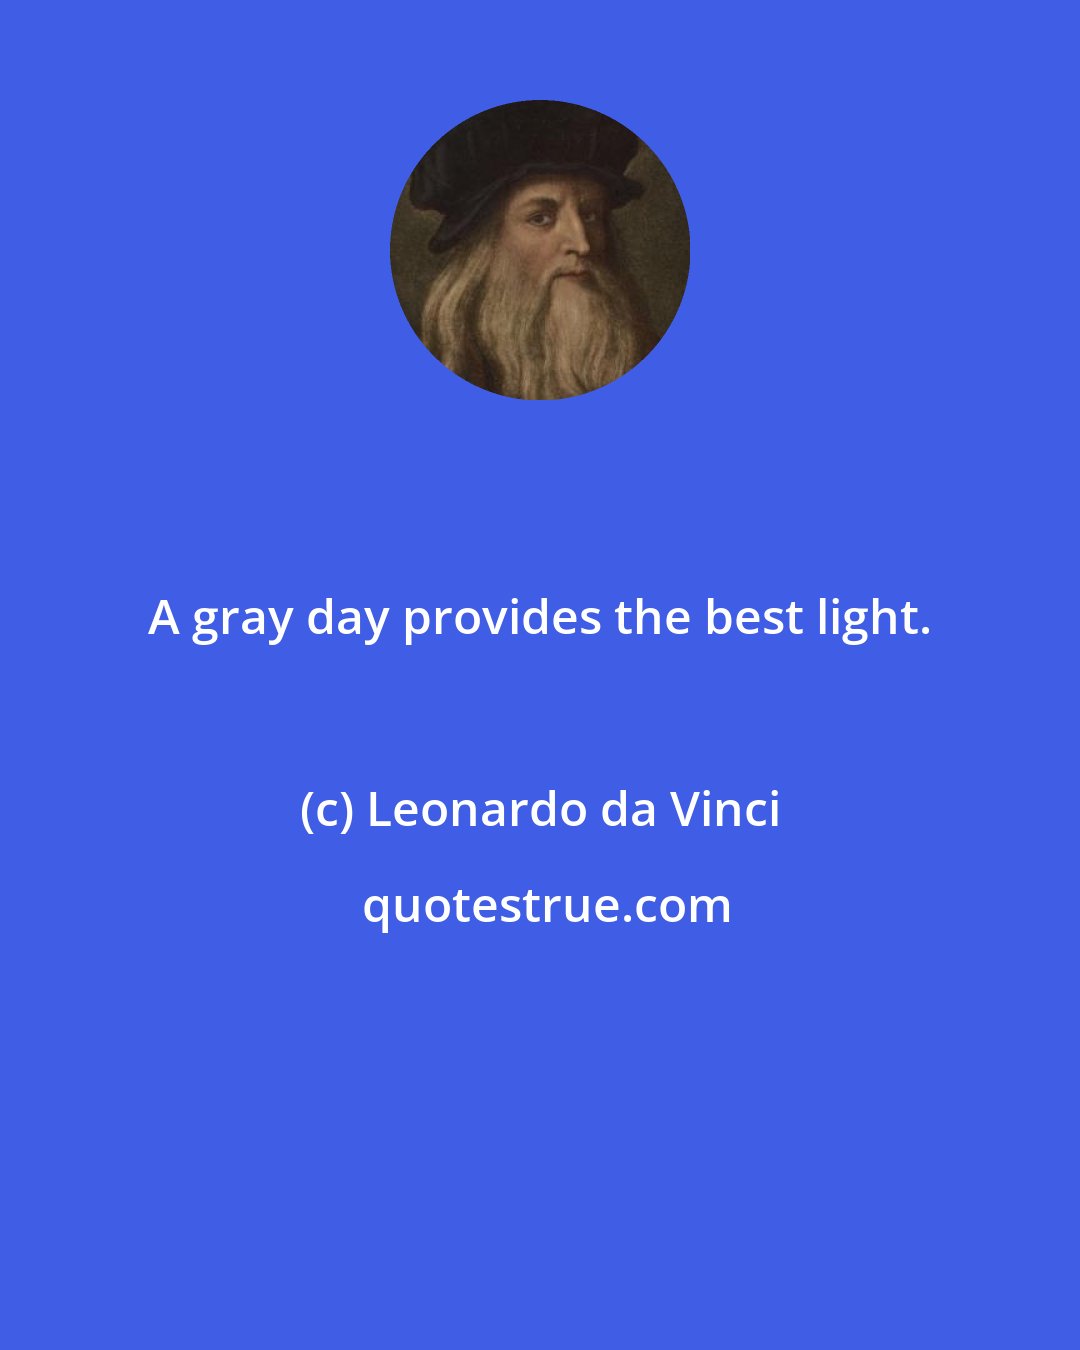 Leonardo da Vinci: A gray day provides the best light.